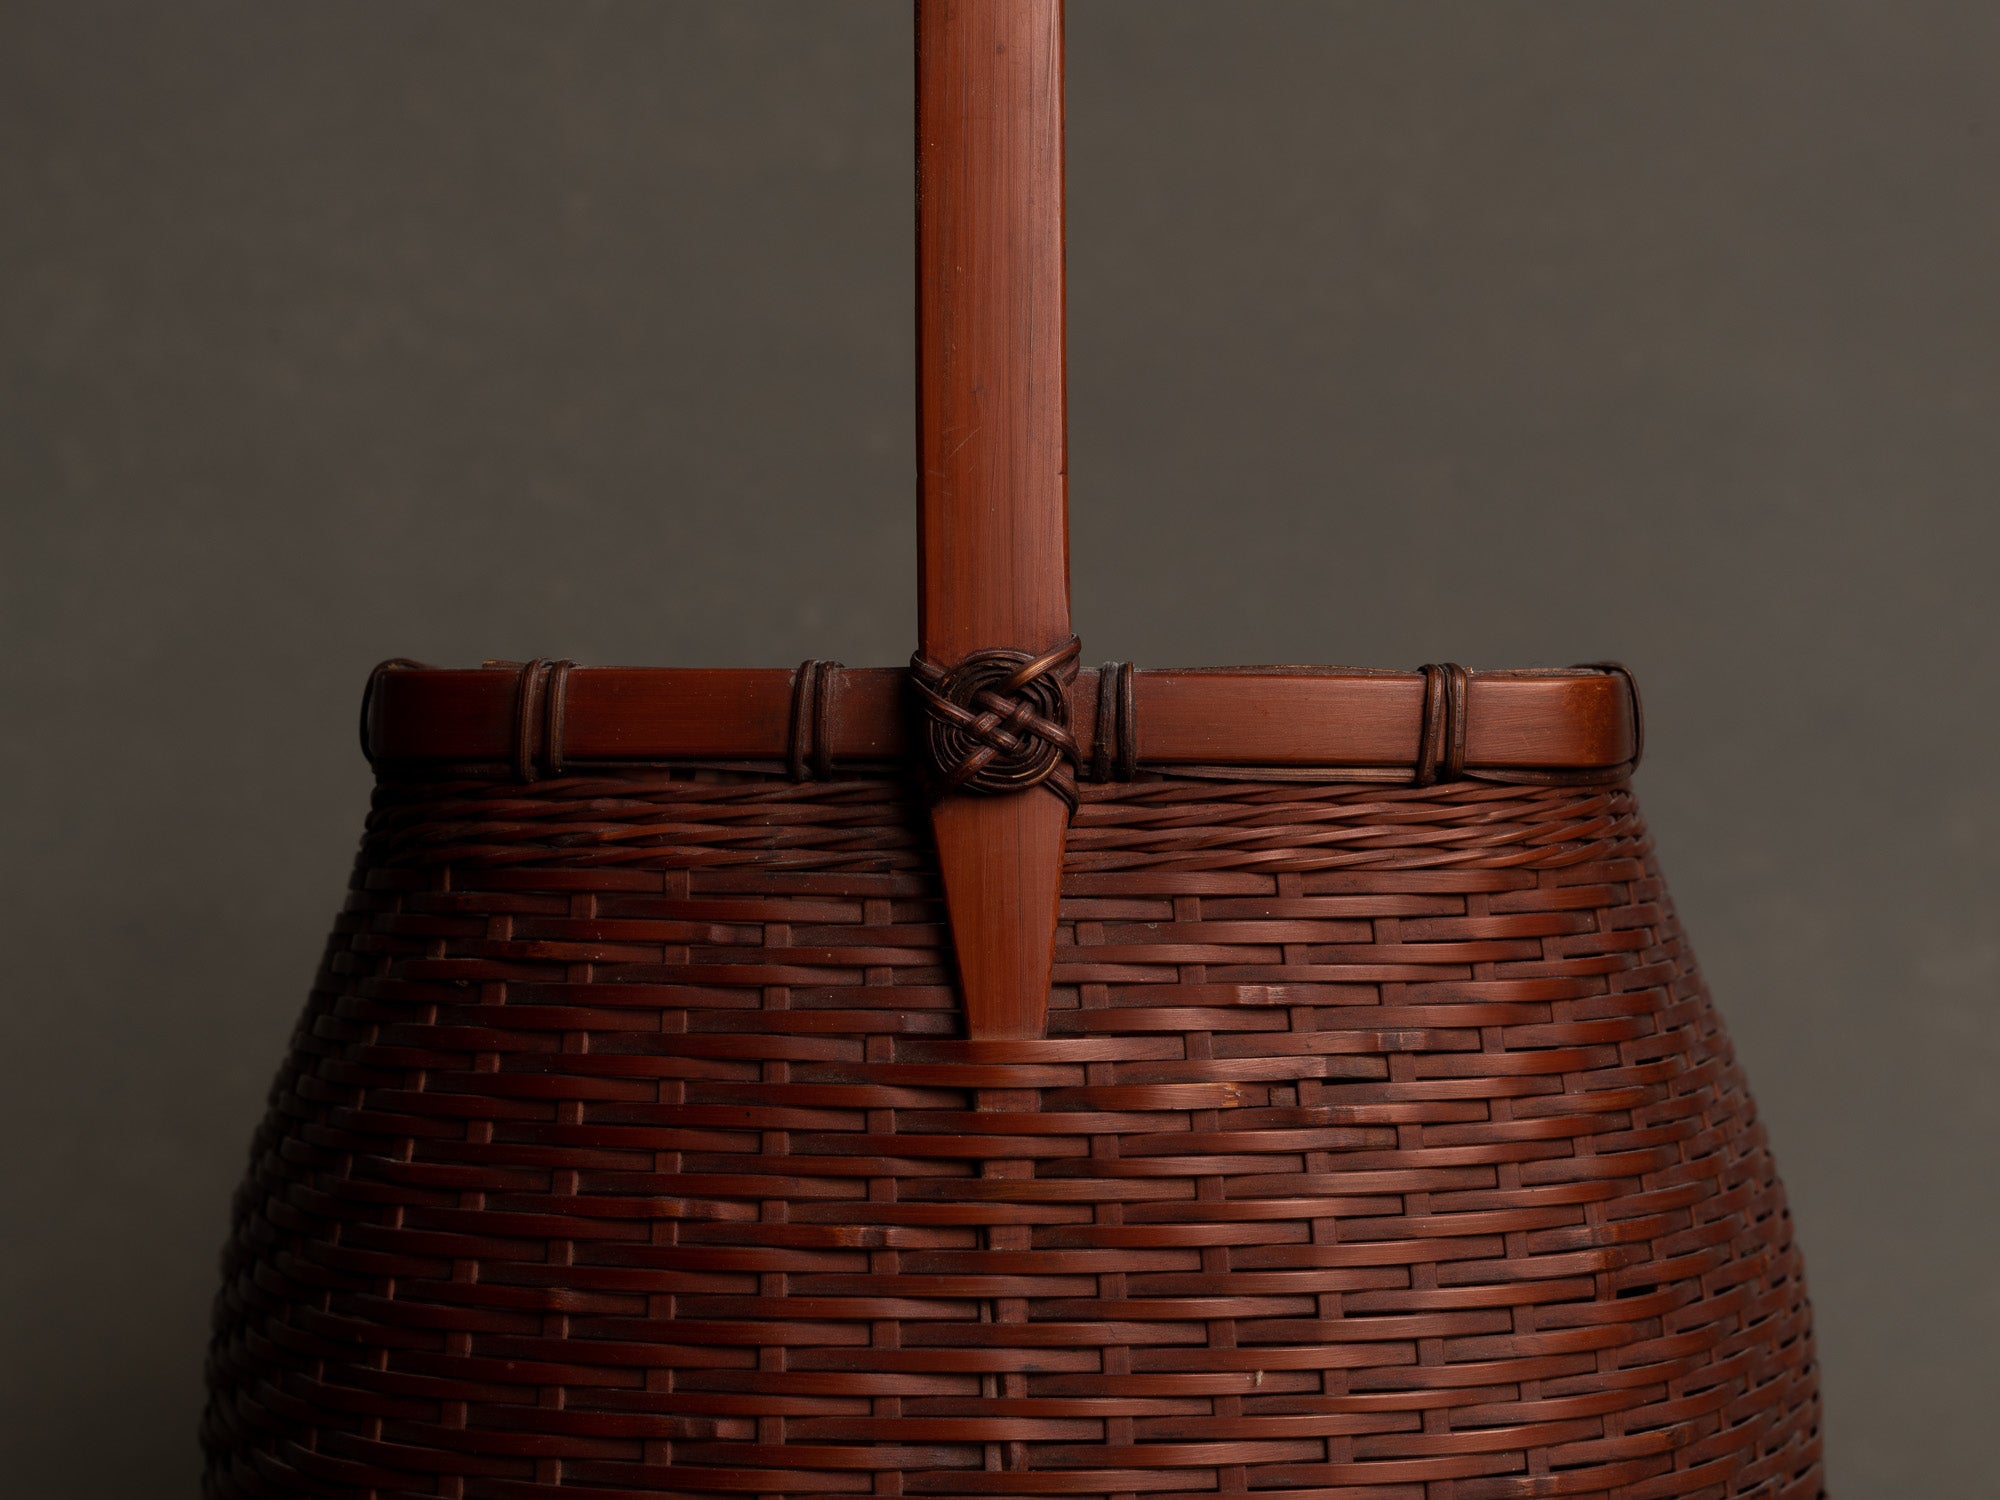 Rare Hanakago, panier rectangulaire à anse pour l'ikebana, Japon (Ère Shōwa)..Rare rectangular hanakago Ikebana bamboo basket with handle, Japan (Shōwa era)